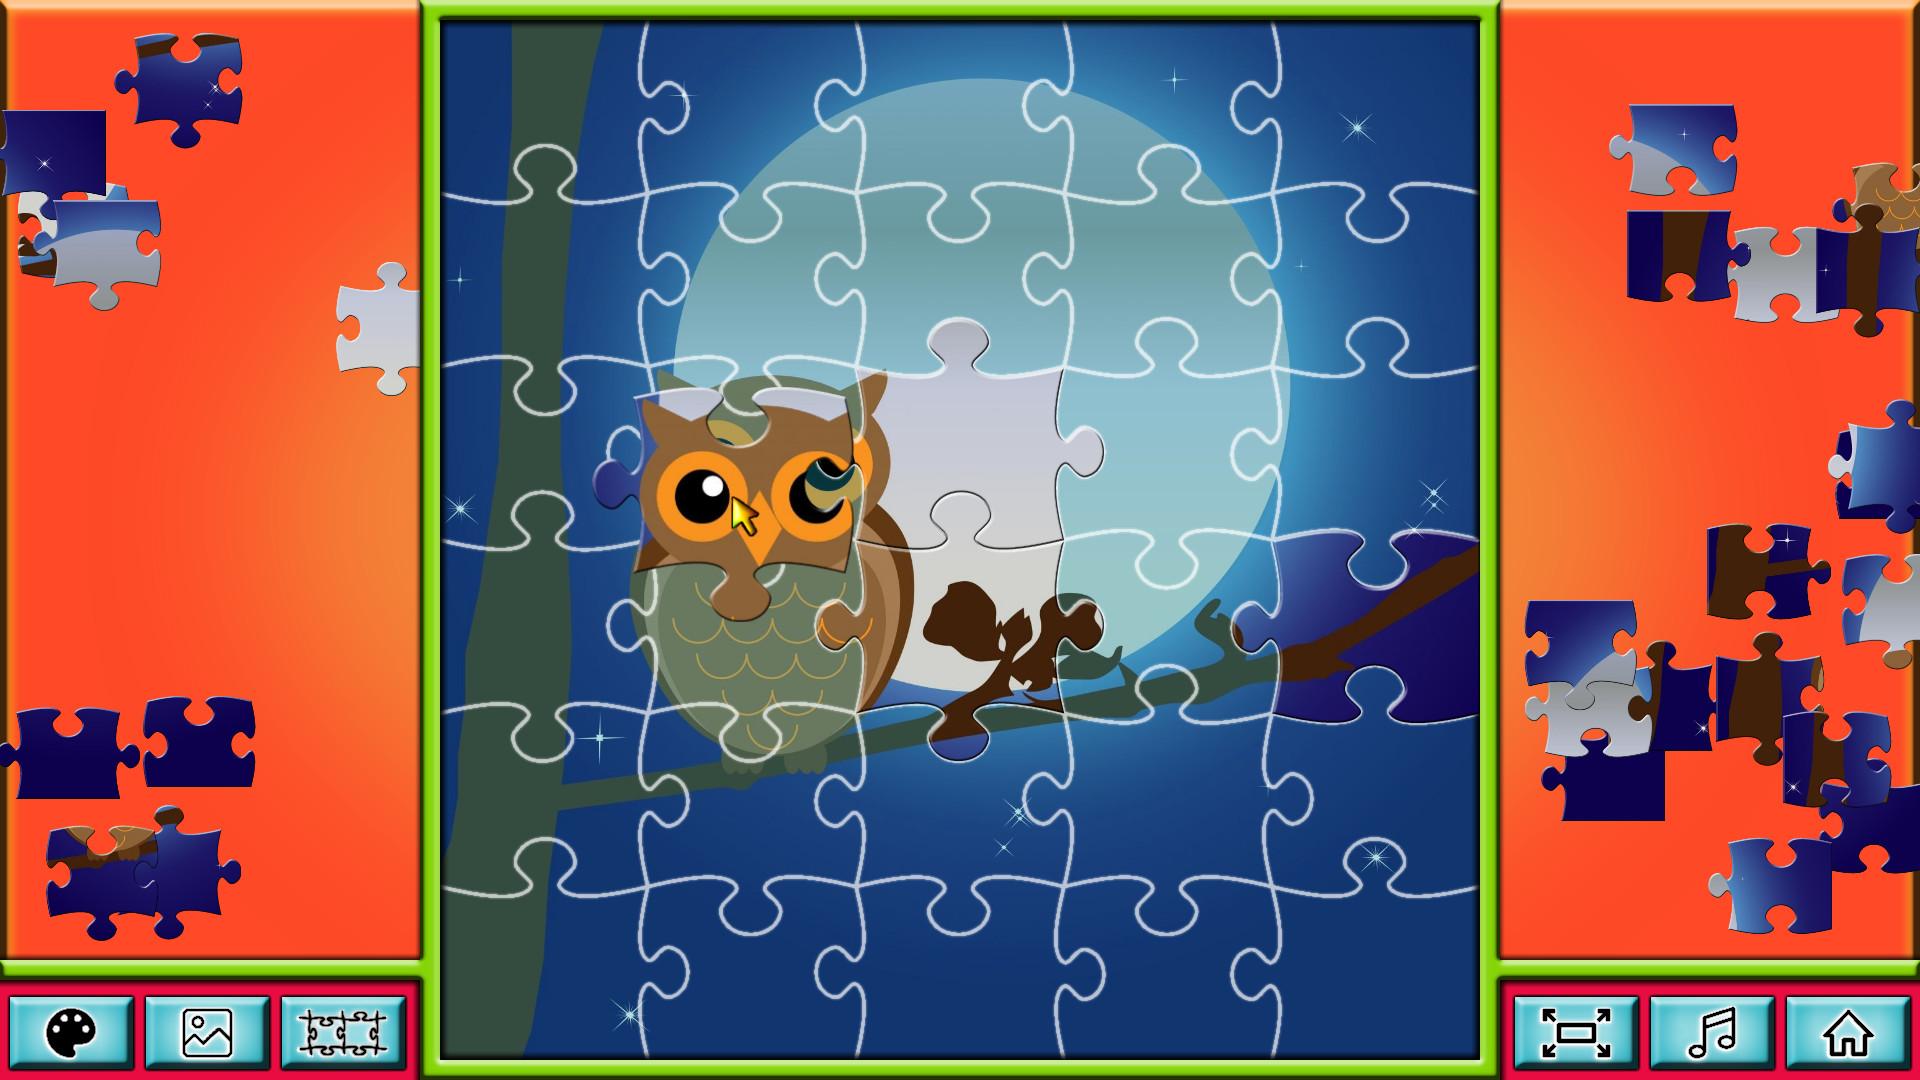 Screenshot №4 from game Pixel Puzzles Junior Jigsaw